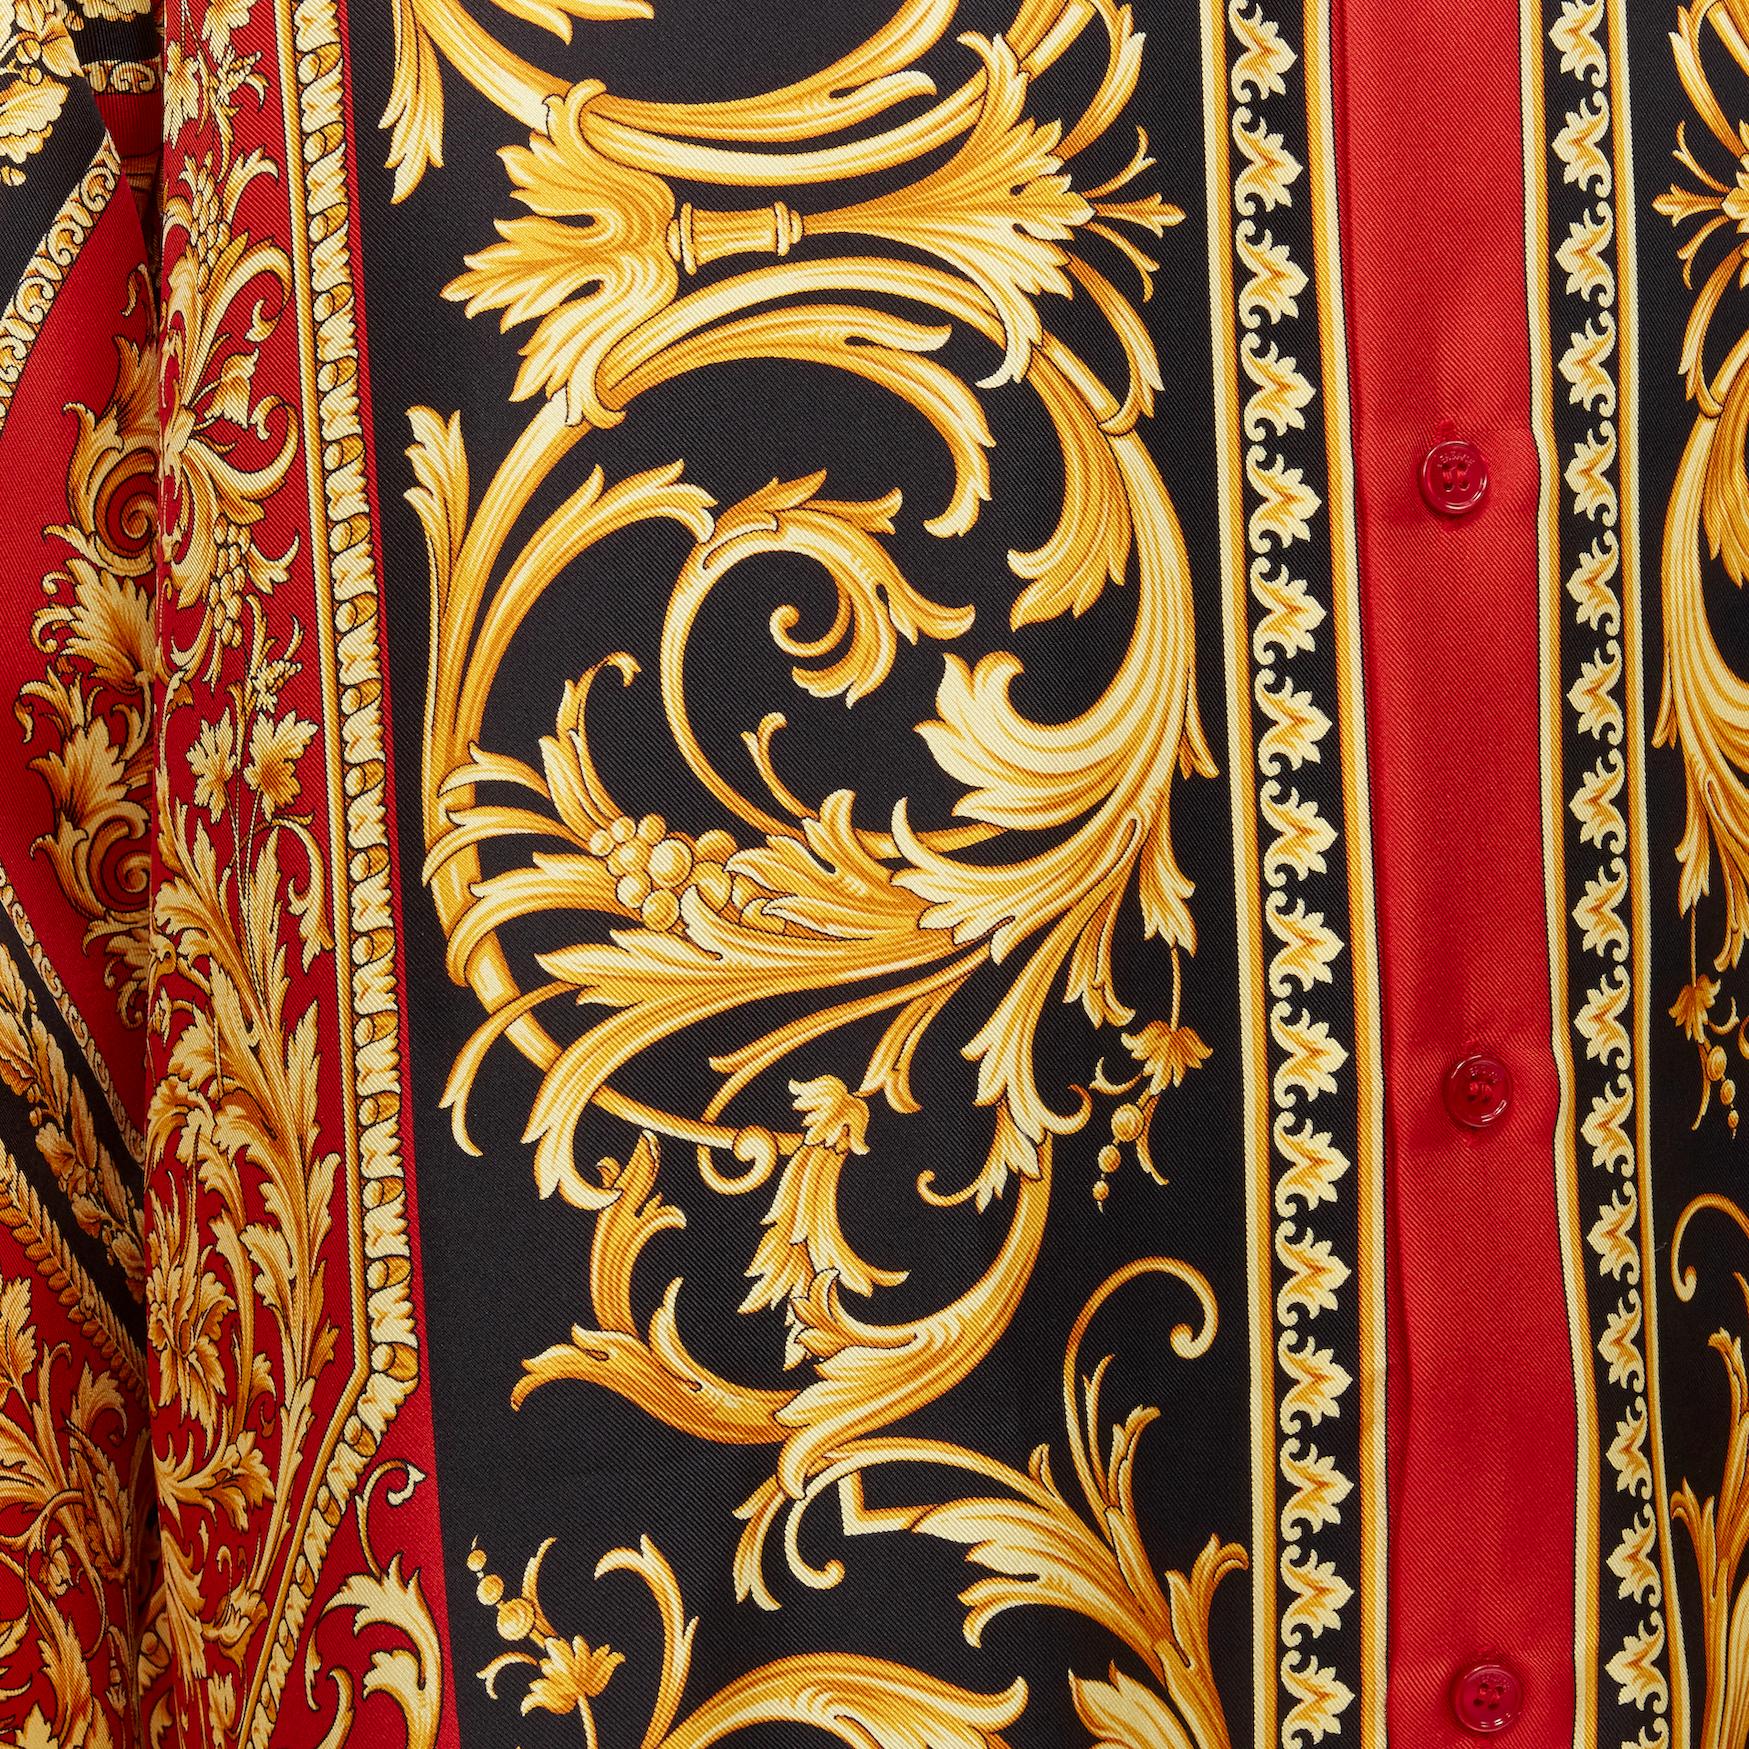 new VERSACE Le Pop Classique Royal Baroque 100% silk black red shirt EU41 XL 1